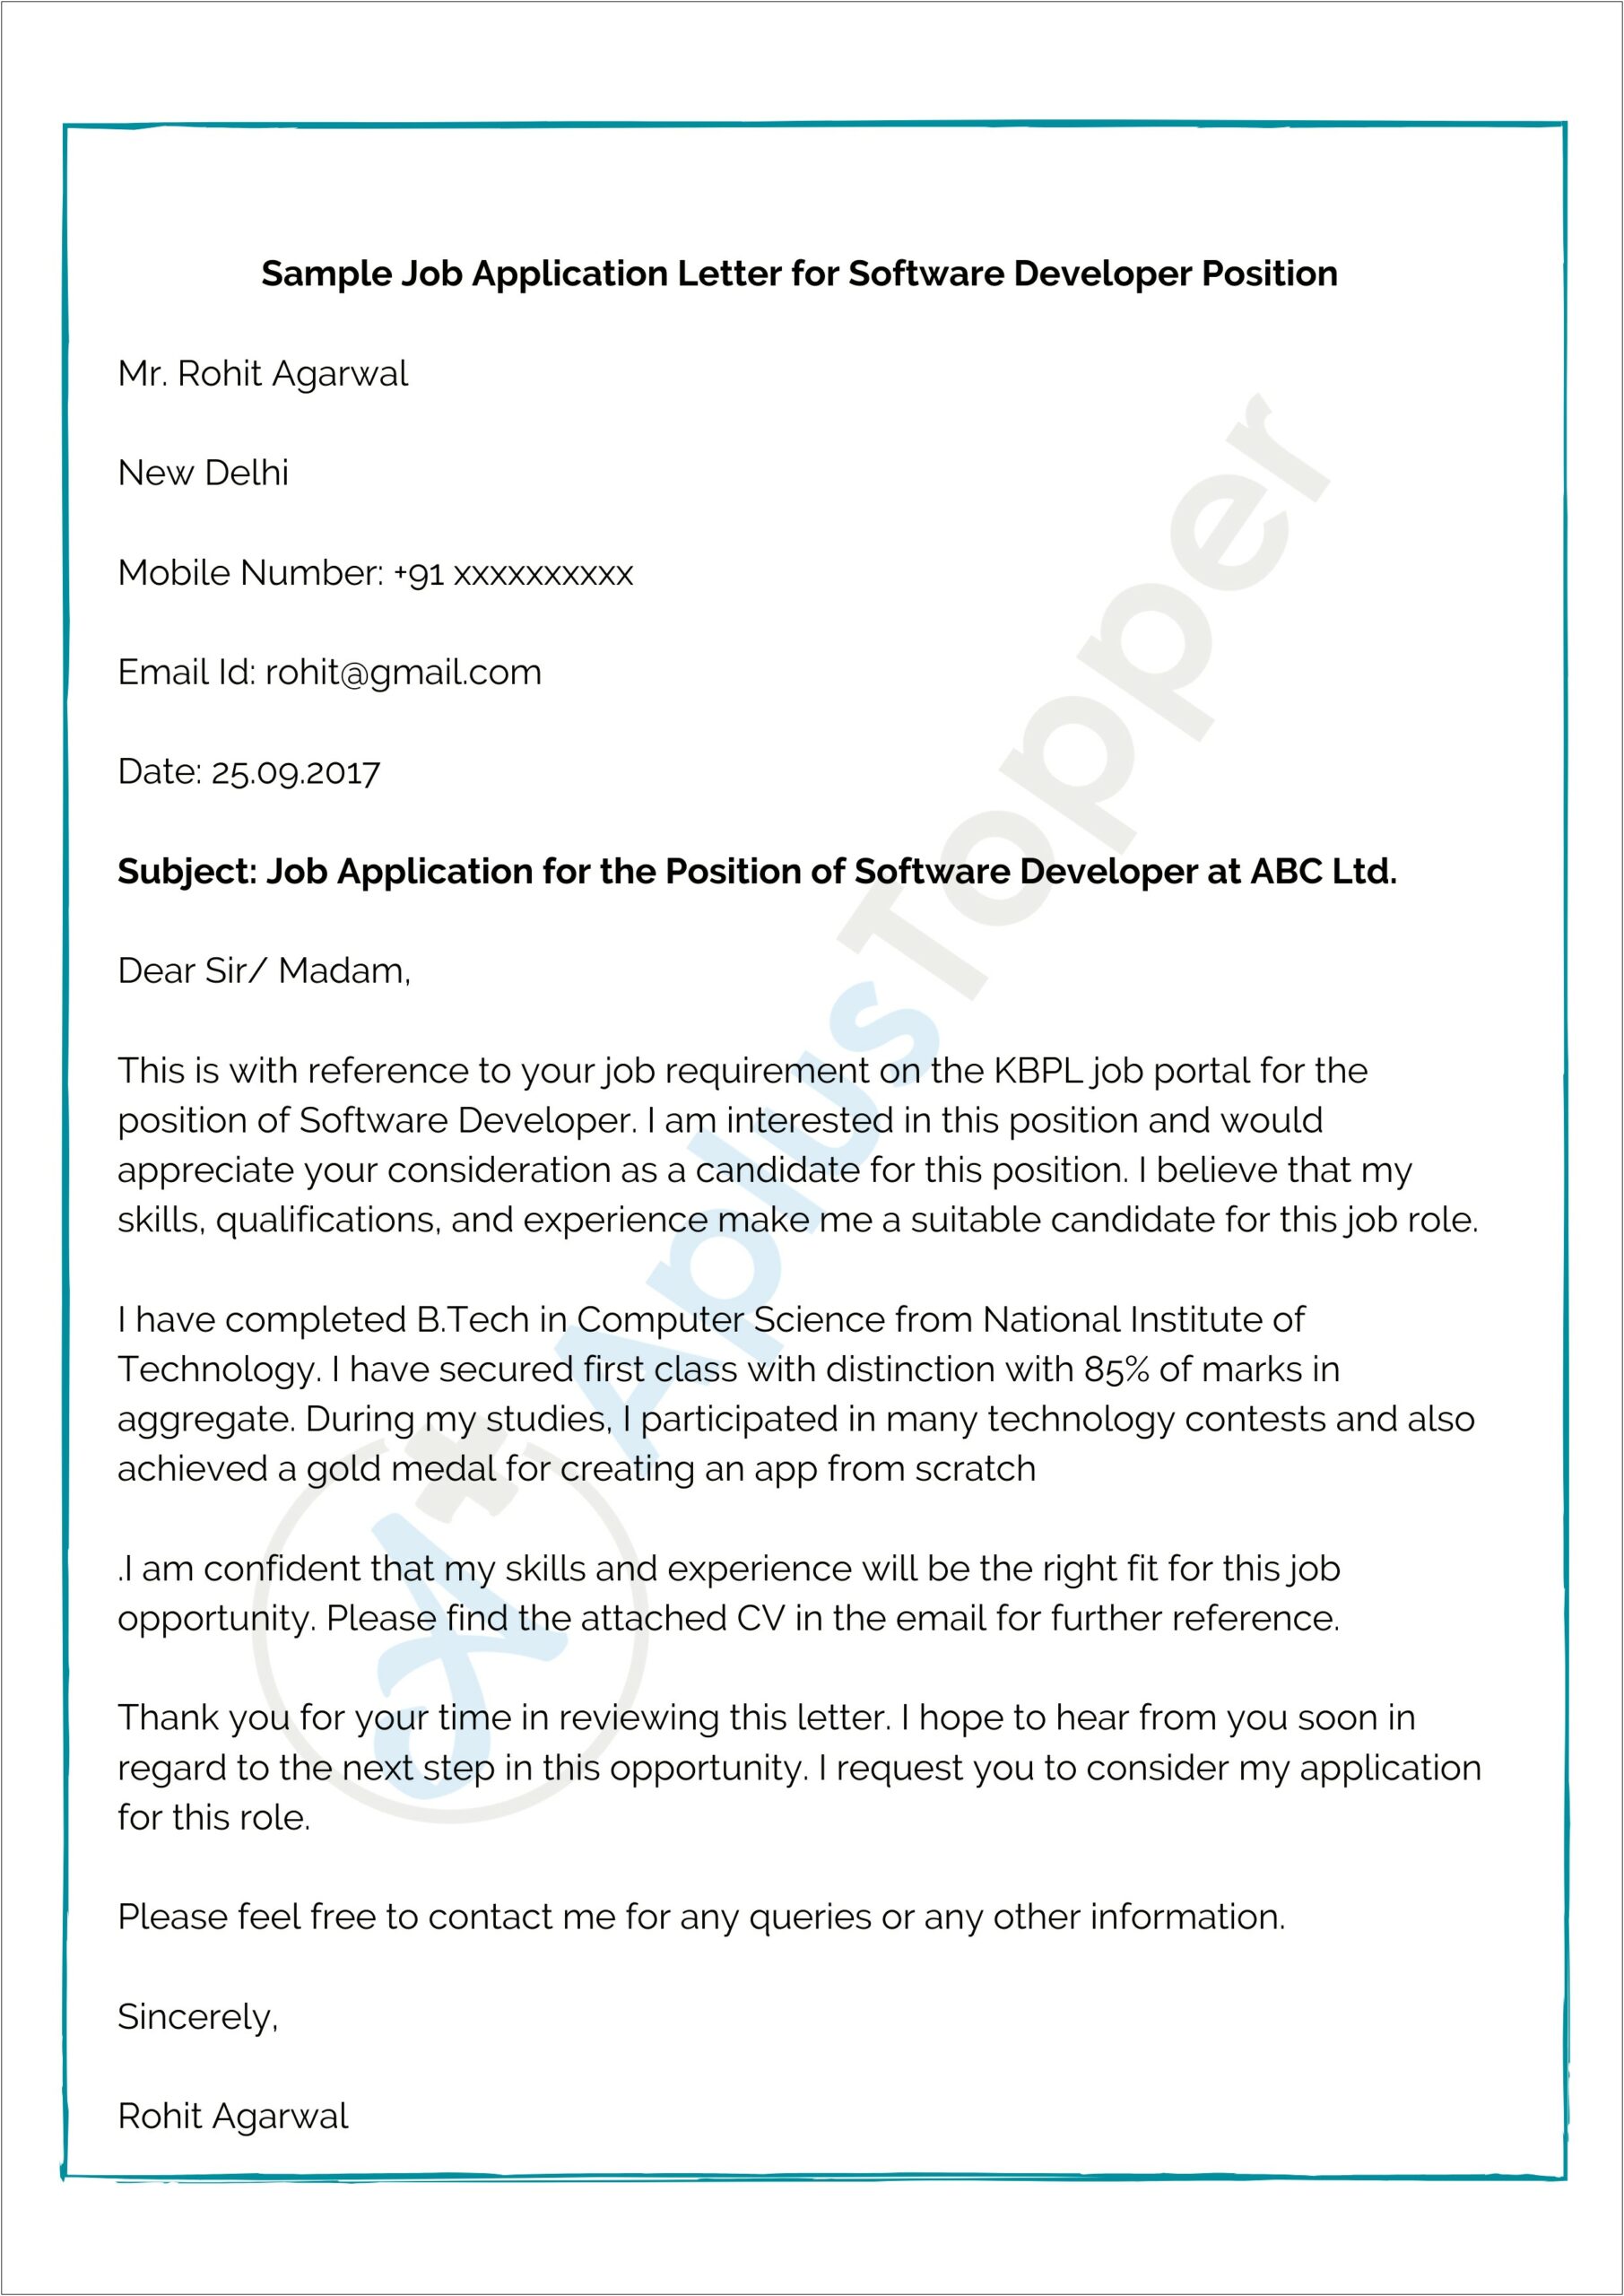 Model Job Application Letter With Resume